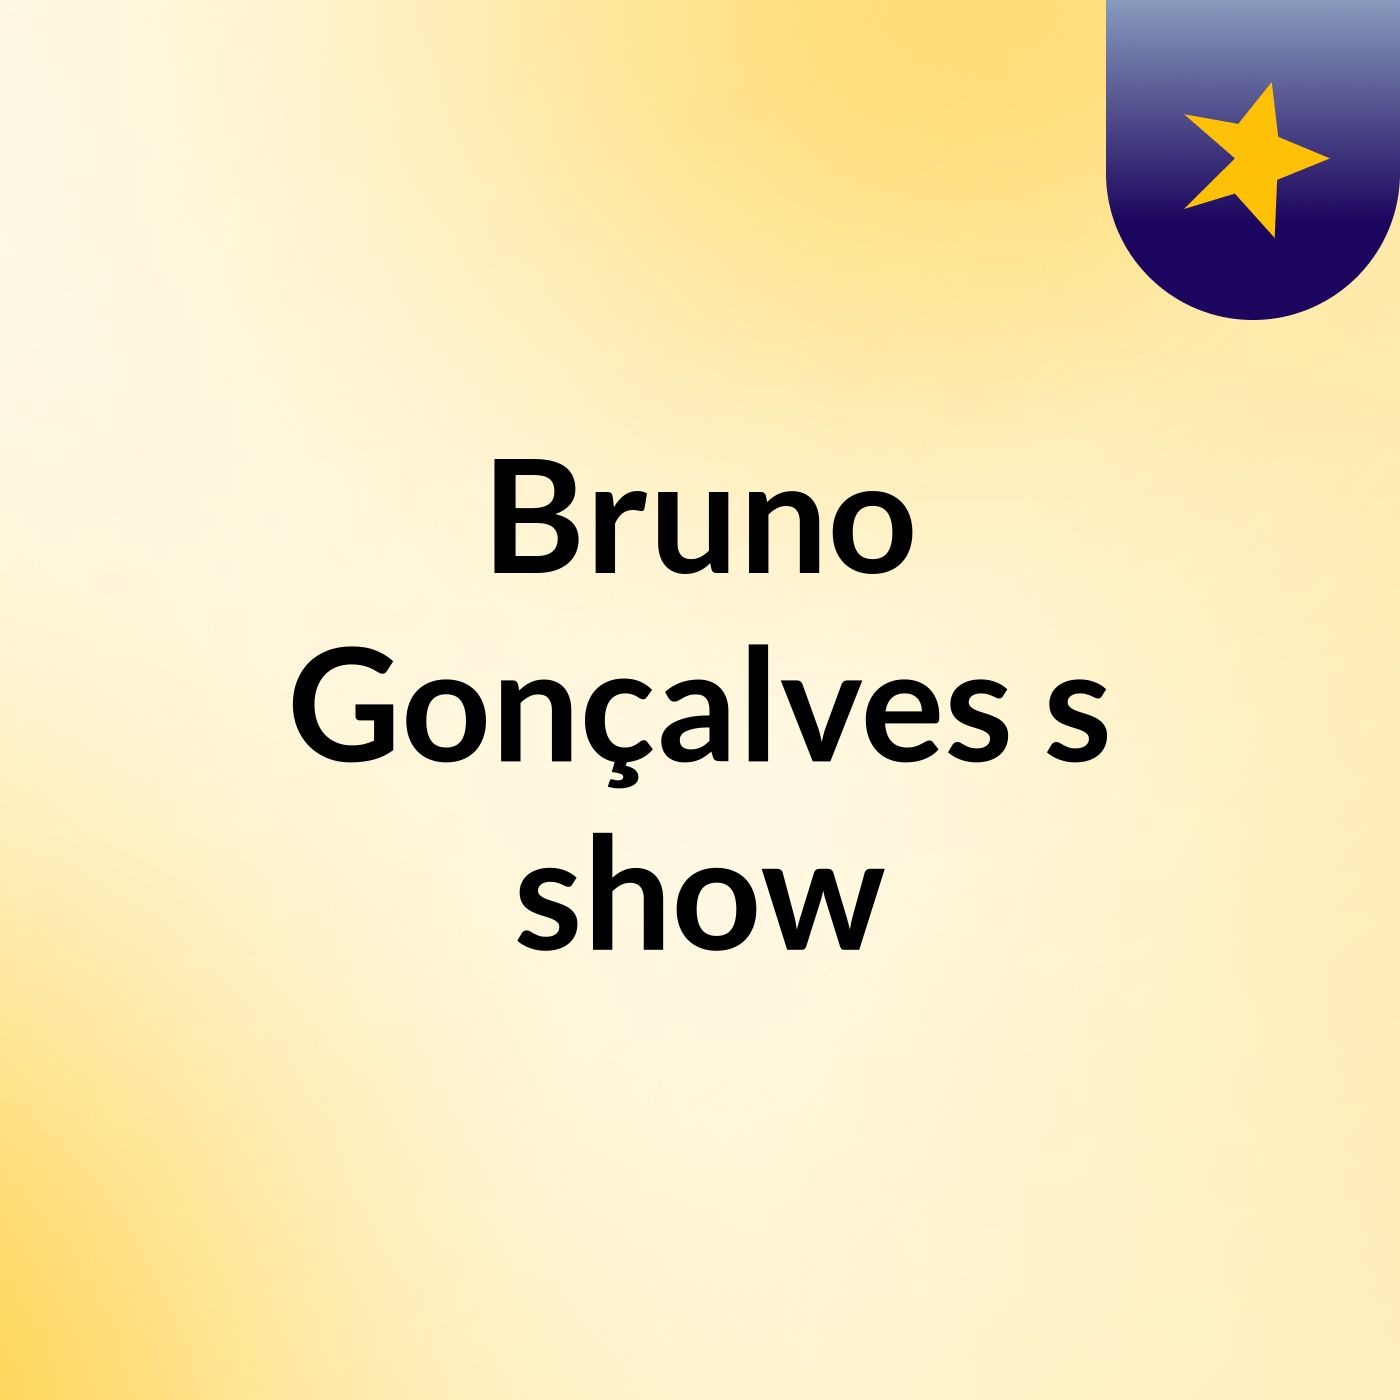 Bruno Gonçalves's show